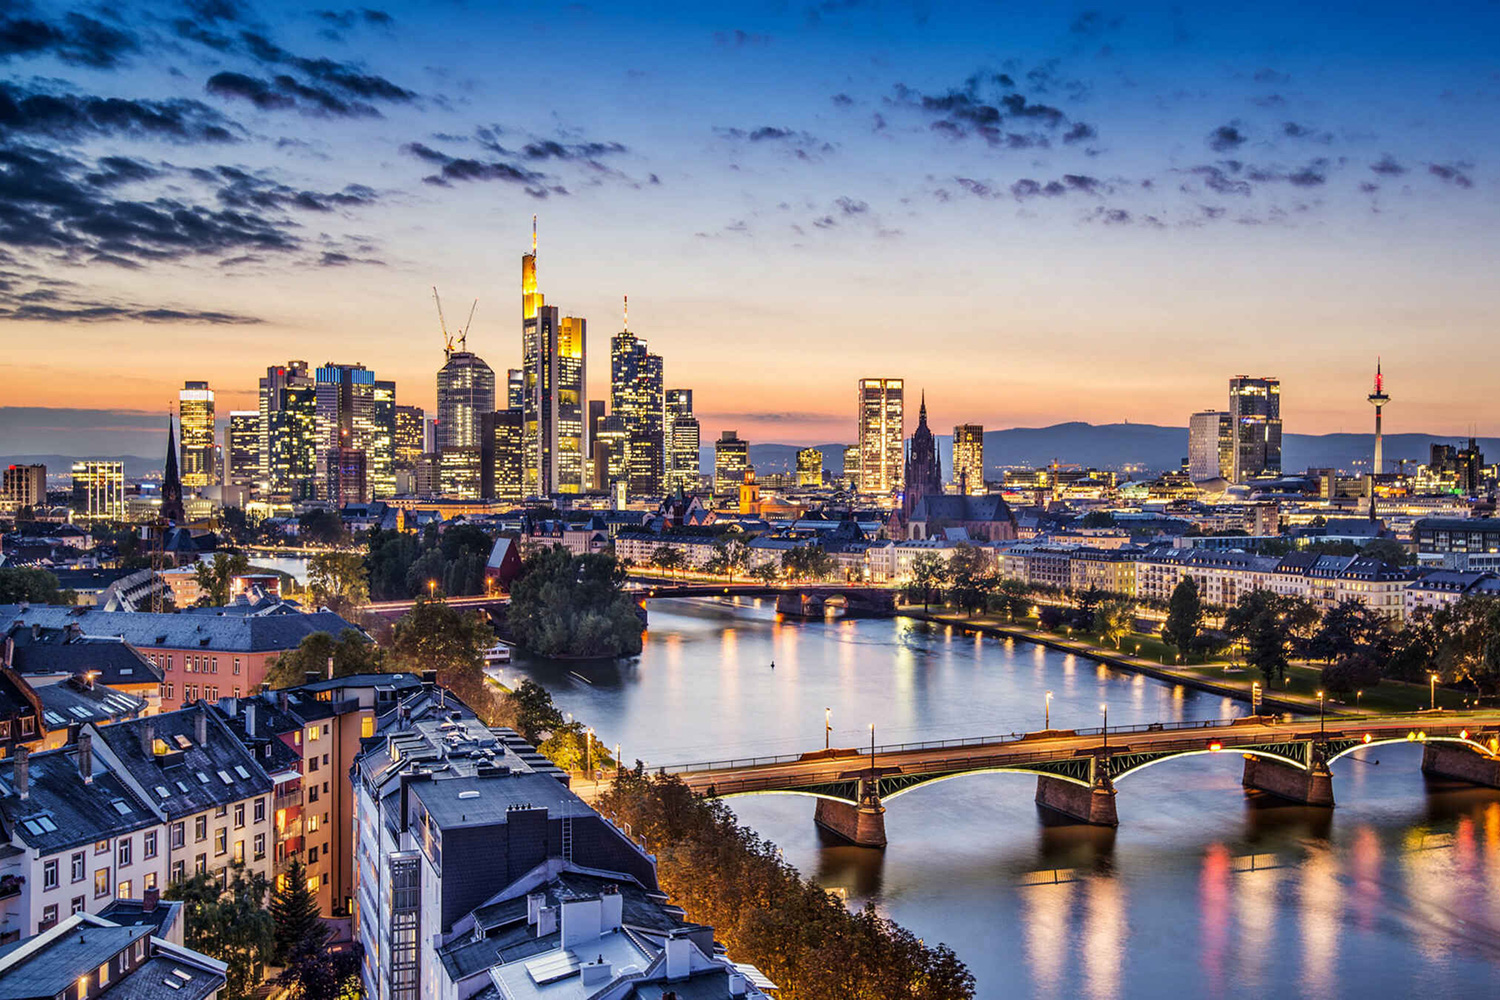 View on the city of Frankfurt